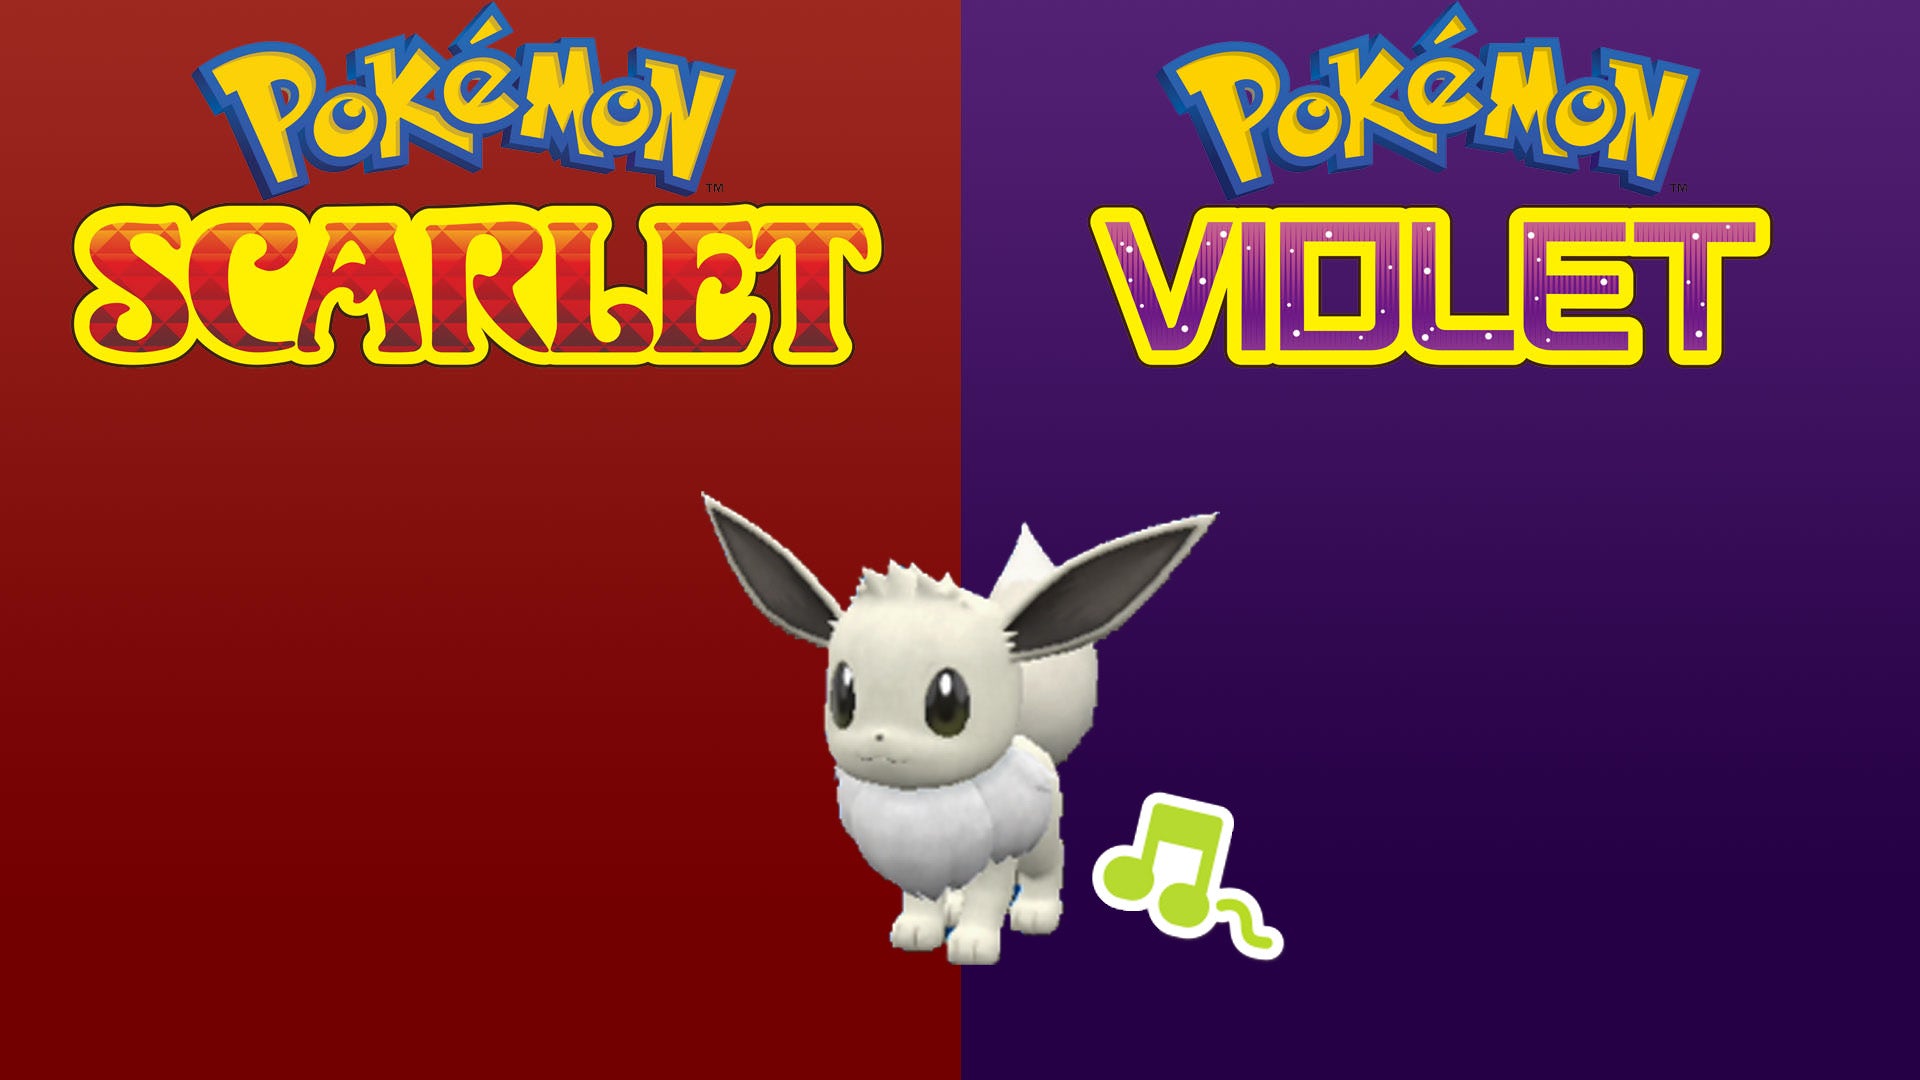 Pokemon Scarlet and Violet Eevee